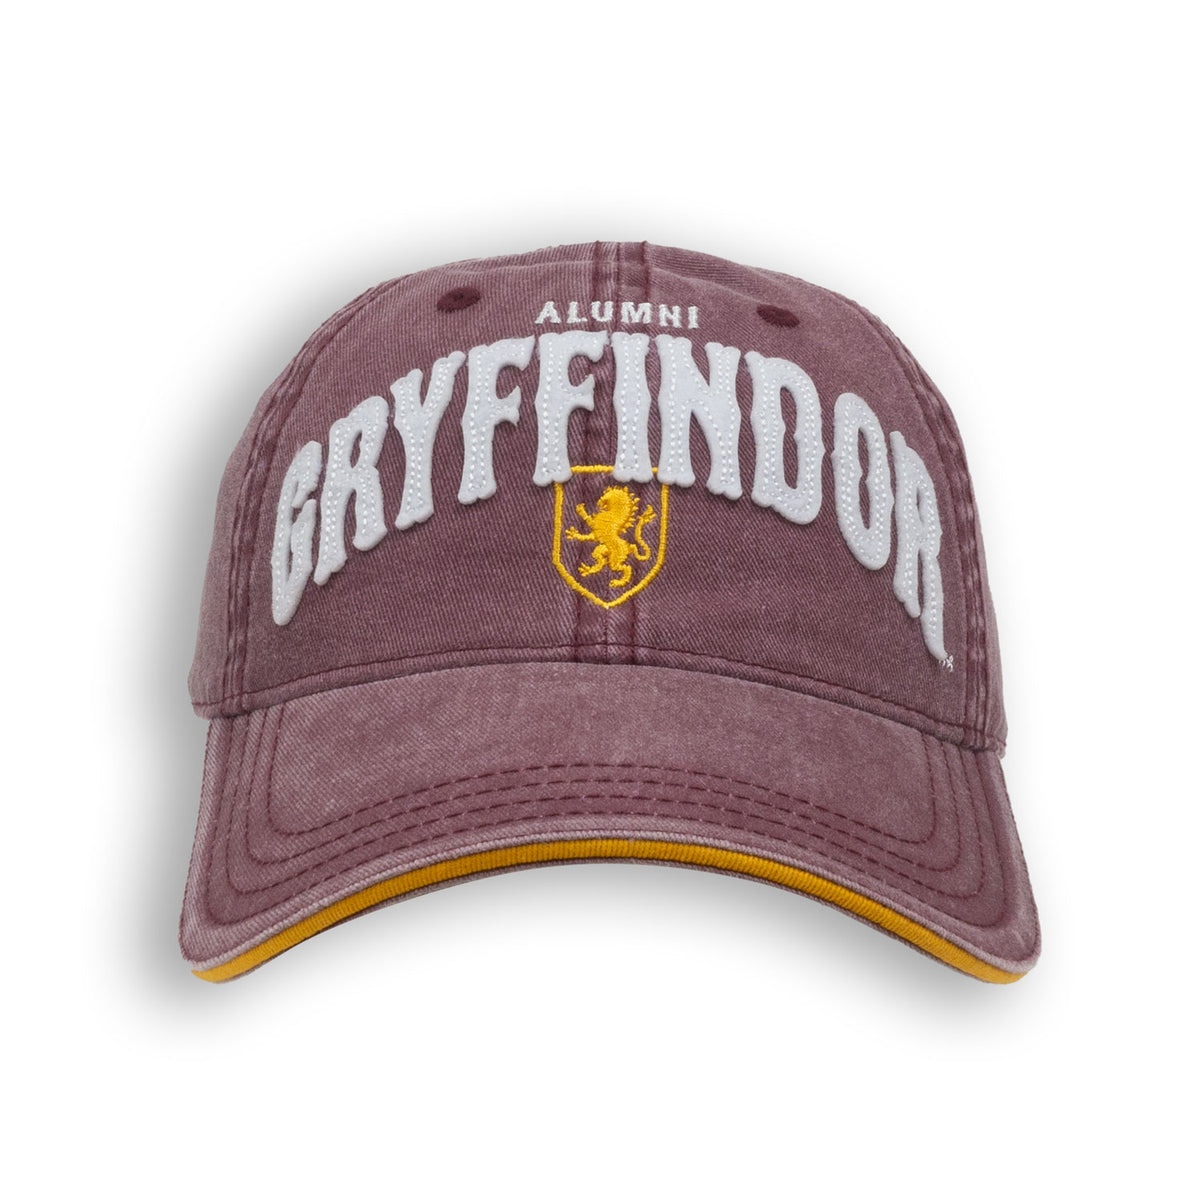 Harry Potter Gryffindor Alumni Adjustable Cap